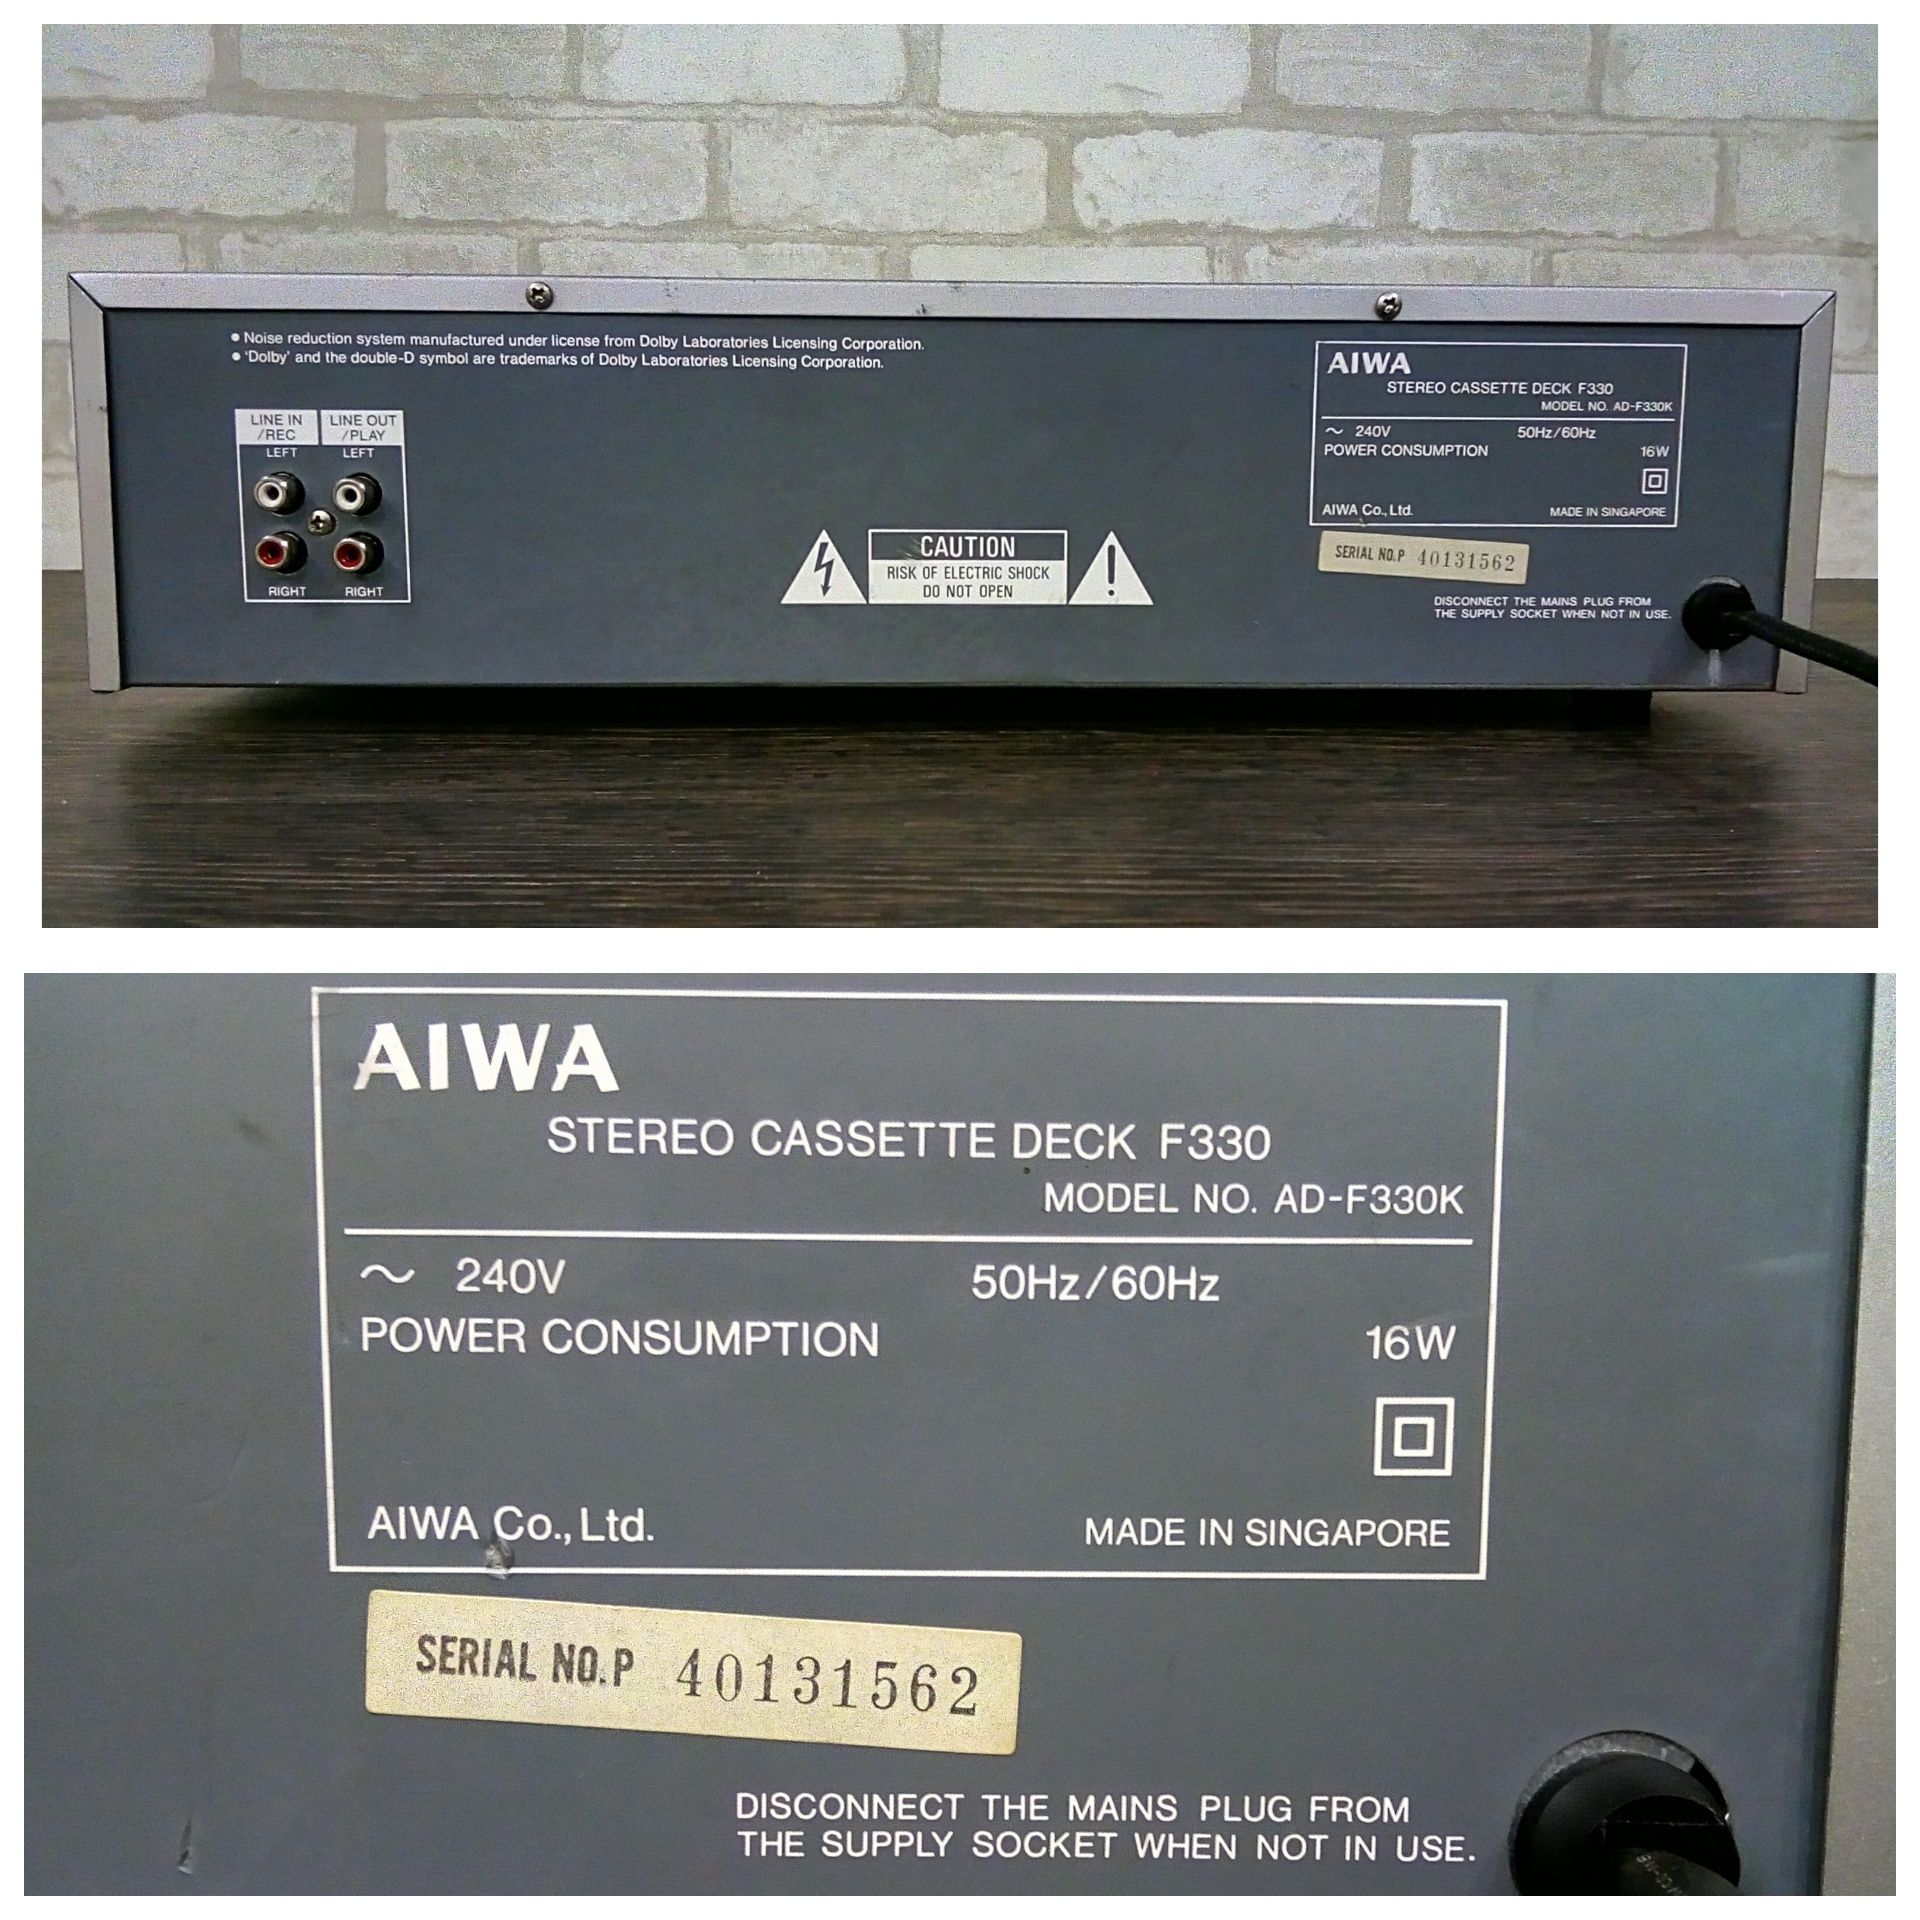 Aiwa AD-F330K Stereo Cassette Deck